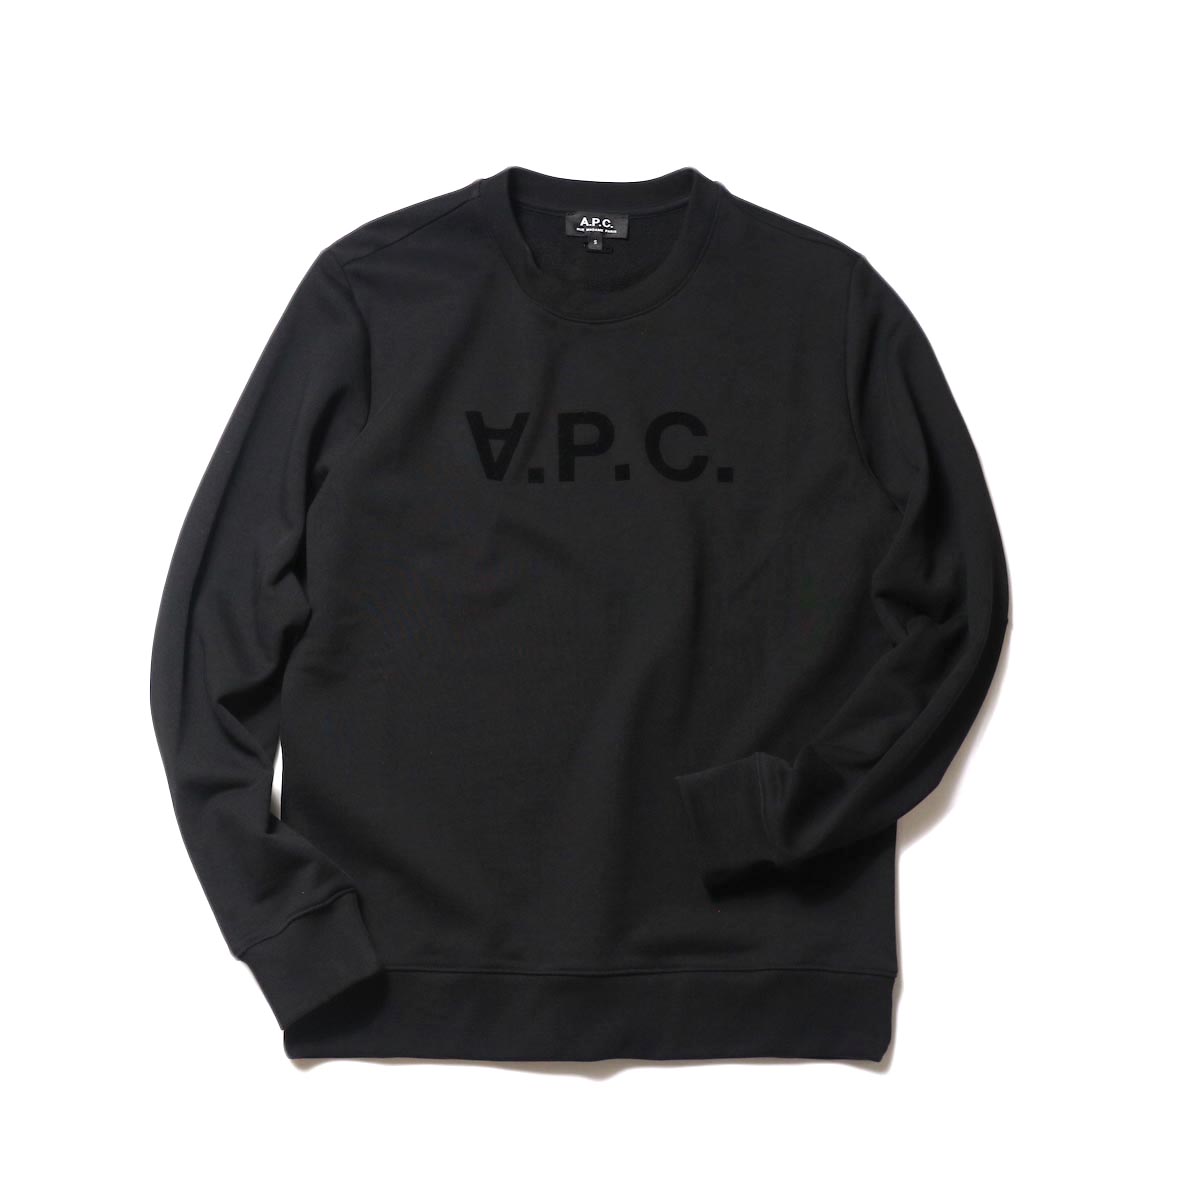 A.P.C. / VPC スウェットシャツ (black)